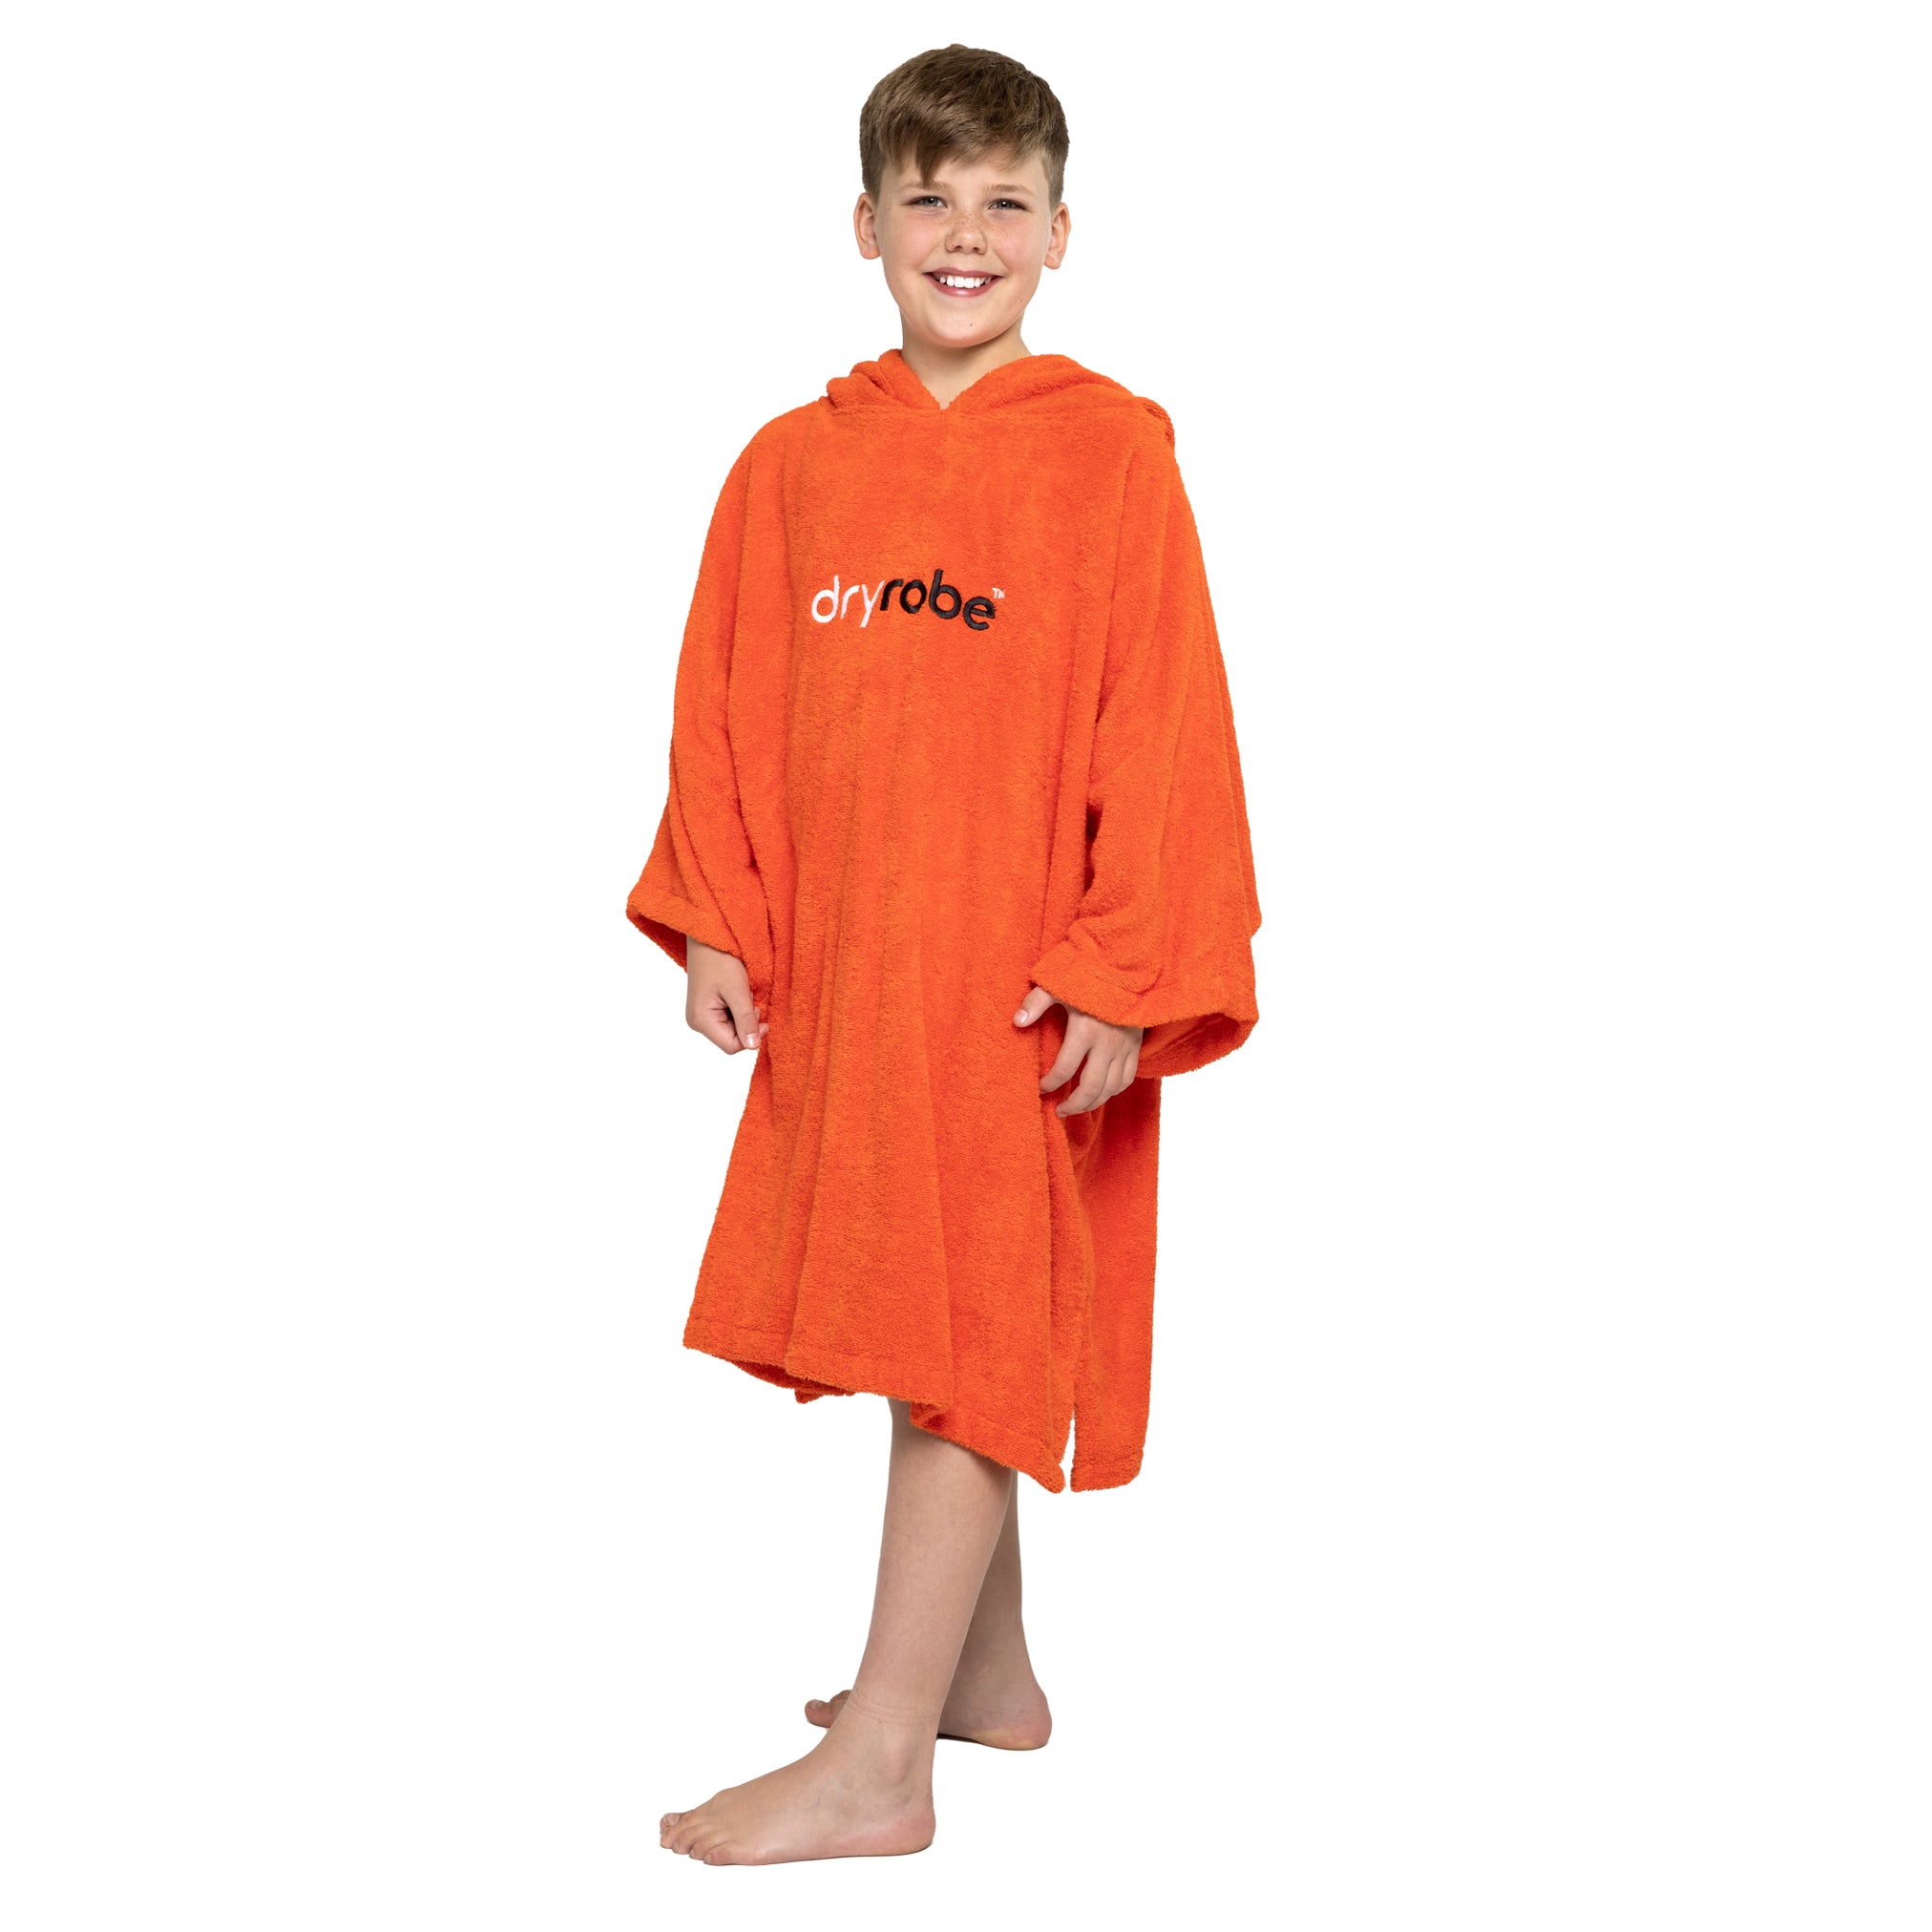 Boy wearing organic cotton towel dryrobe® in orange side view